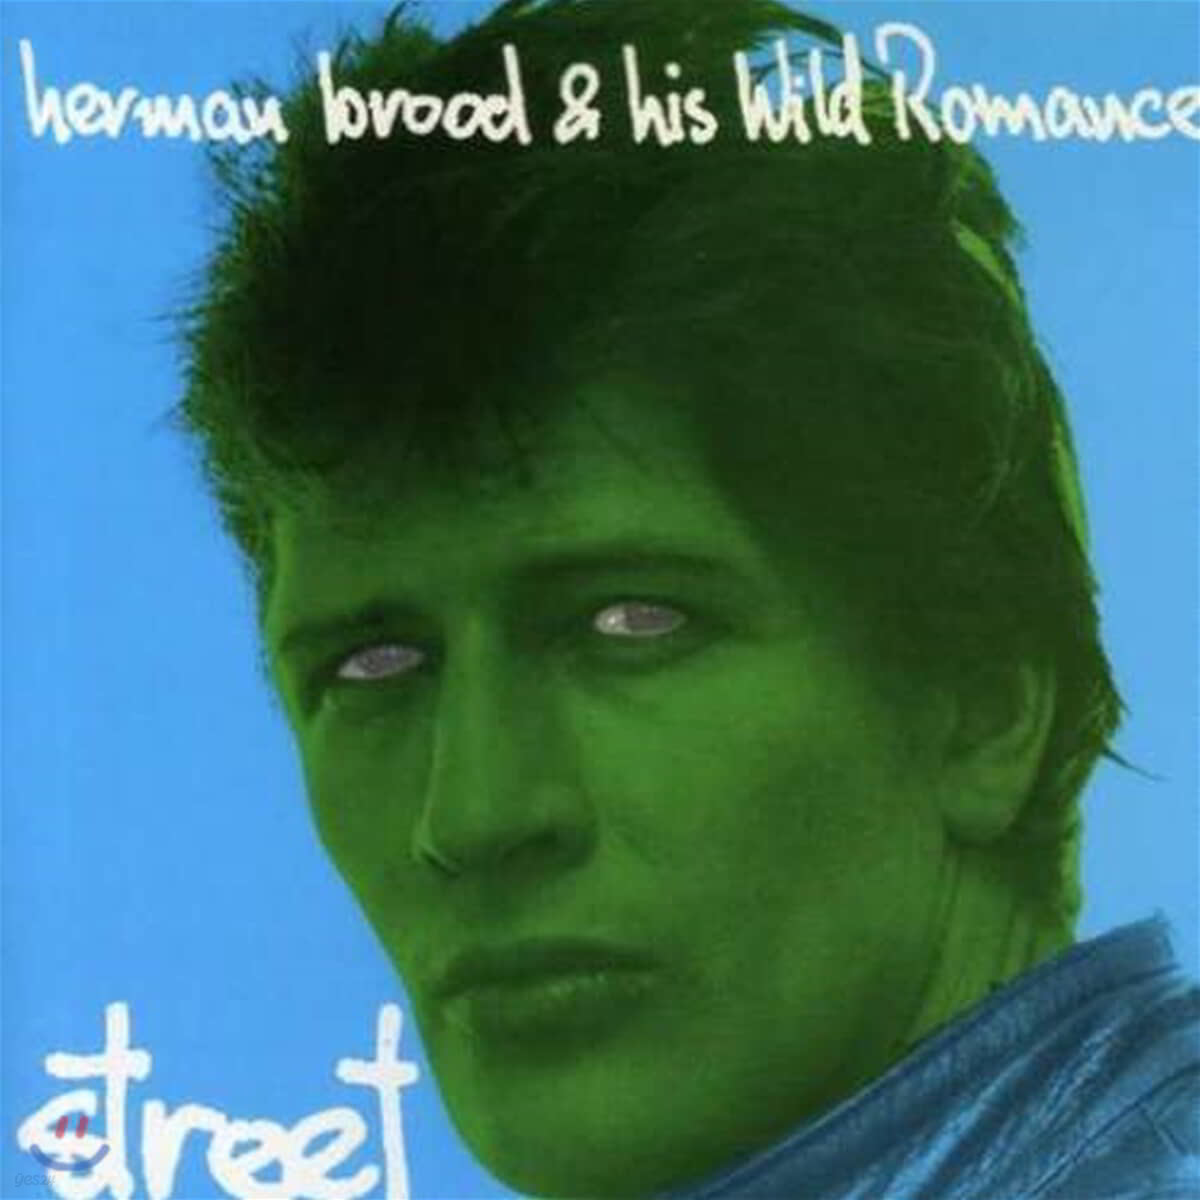 Herman Brood &amp; His Wild Romance (허만 부루드 앤 히즈 와일드 로맨스) - Street [LP]